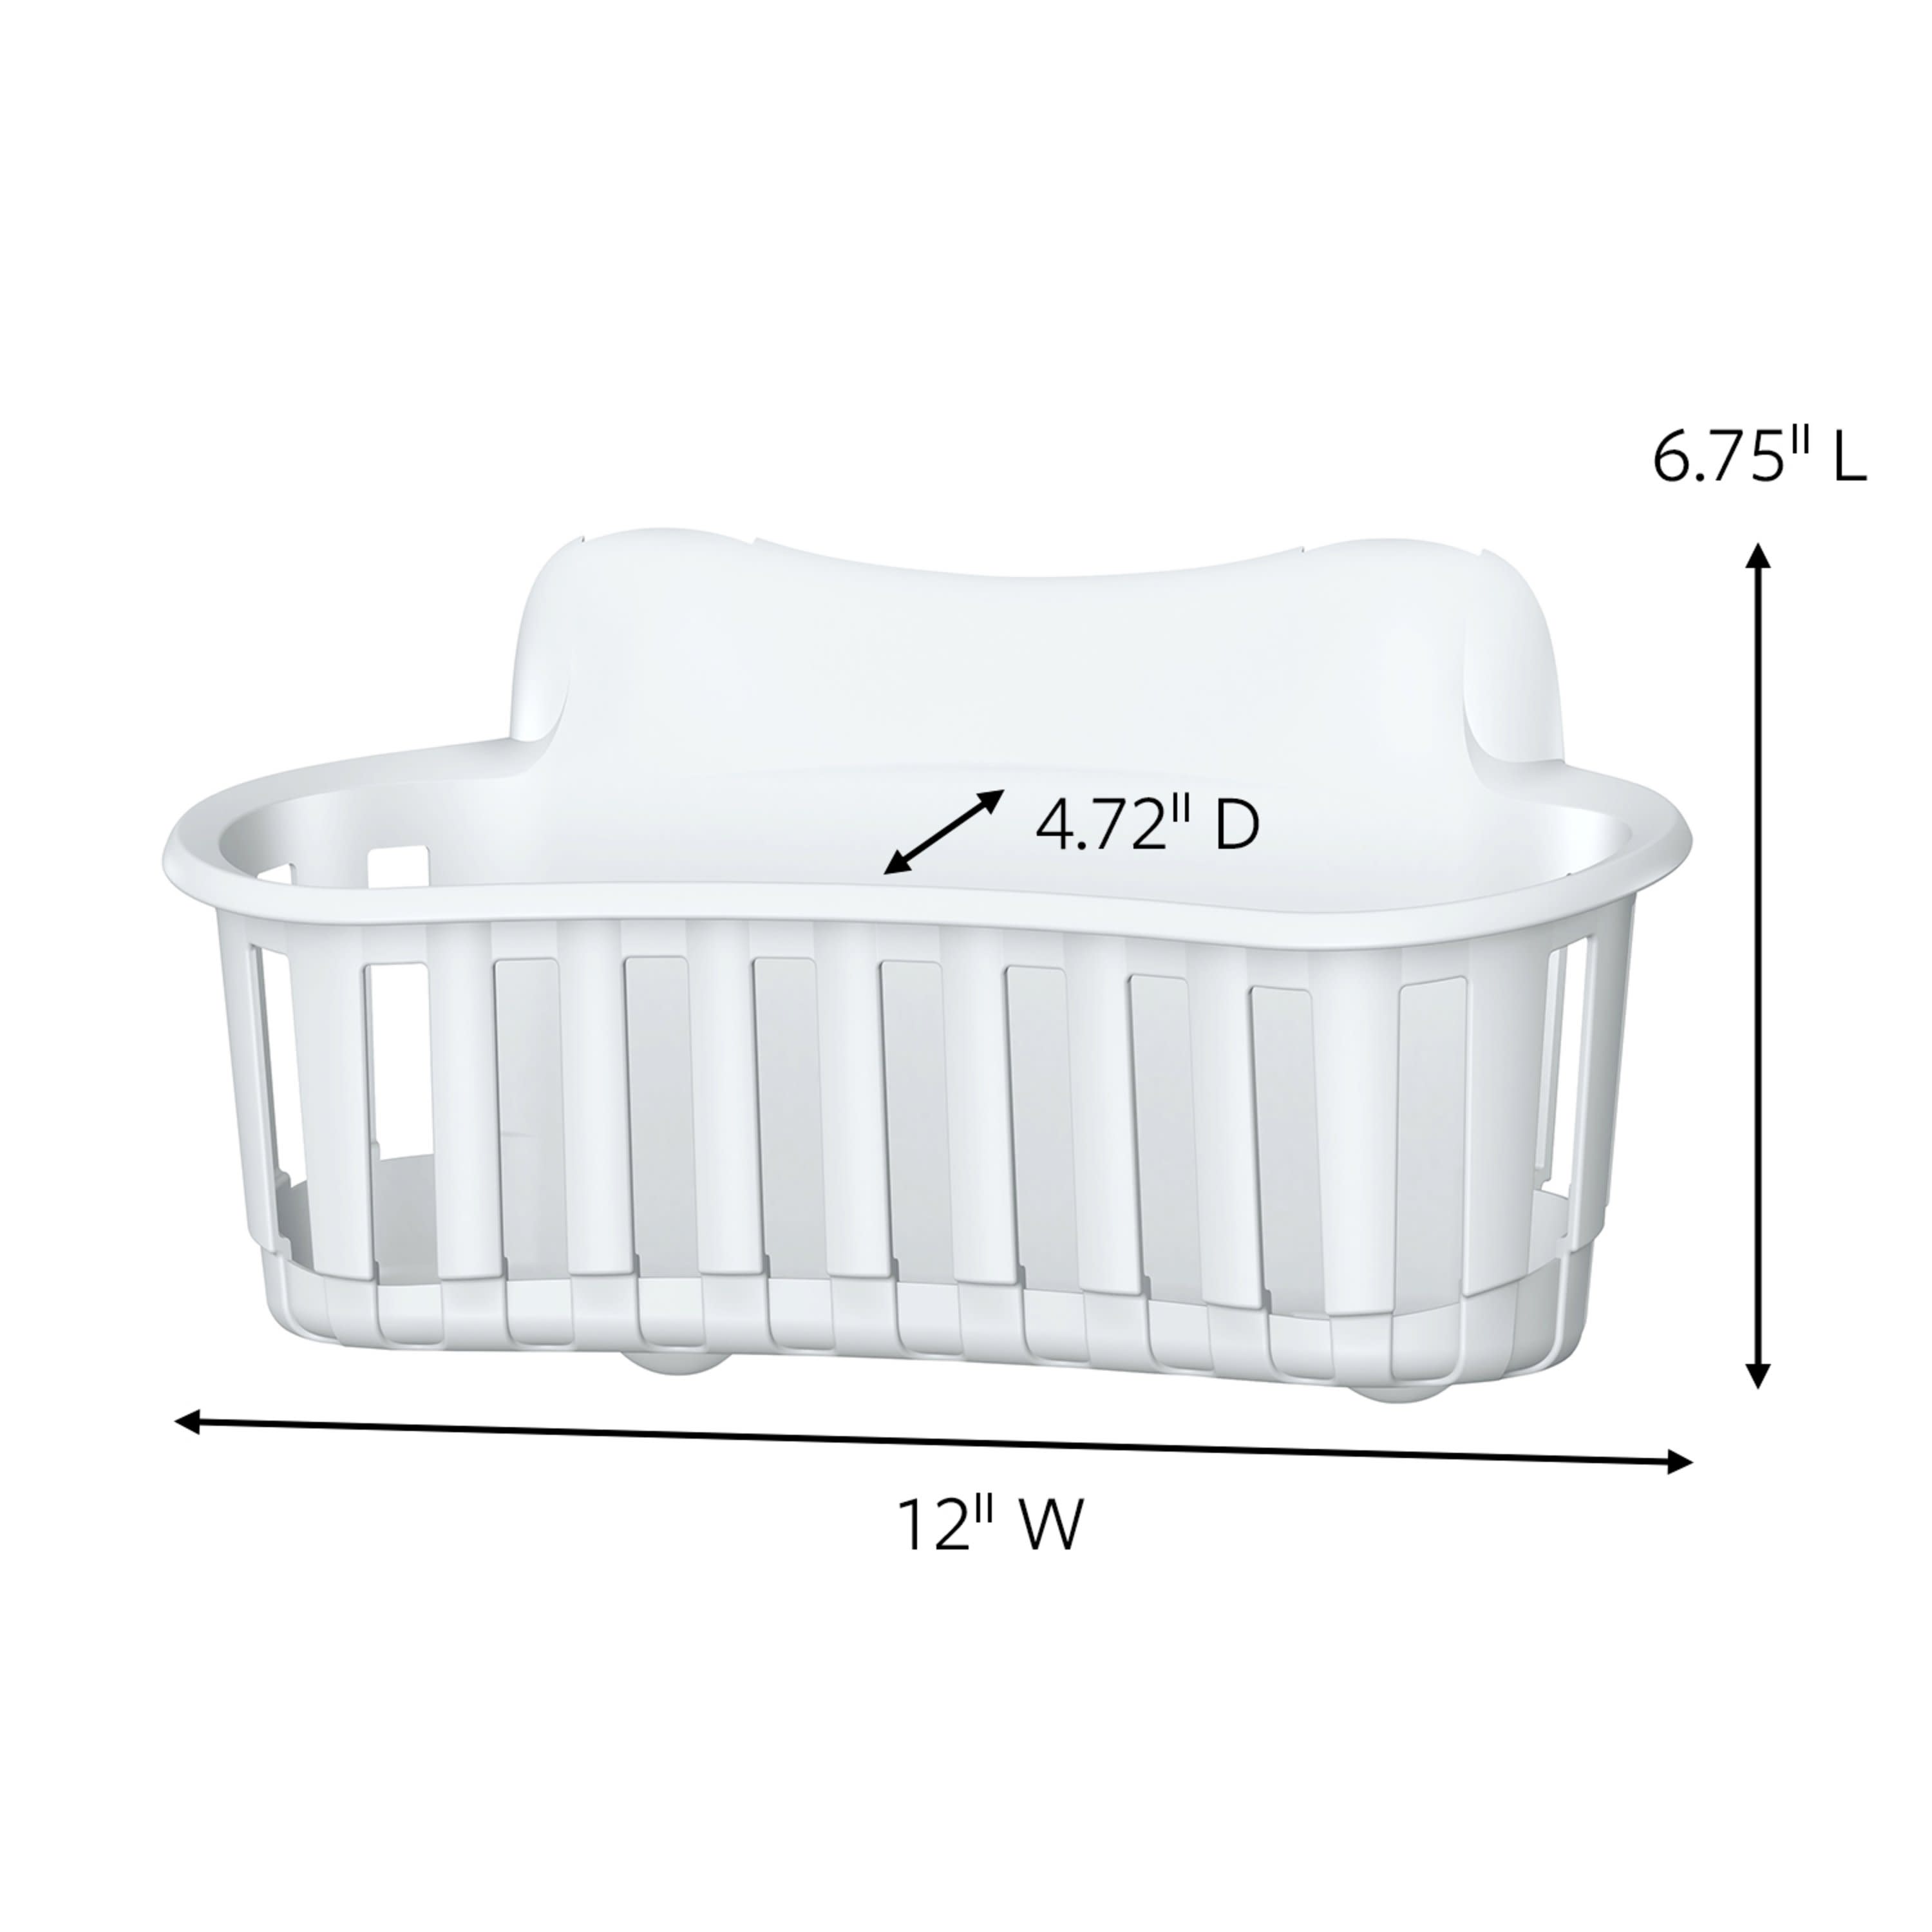 Command 7.5 lb. Large White Bath Caddy Hanger (1 Hooks, 2 Water Resistant  Strips) BATH19-ES - The Home Depot